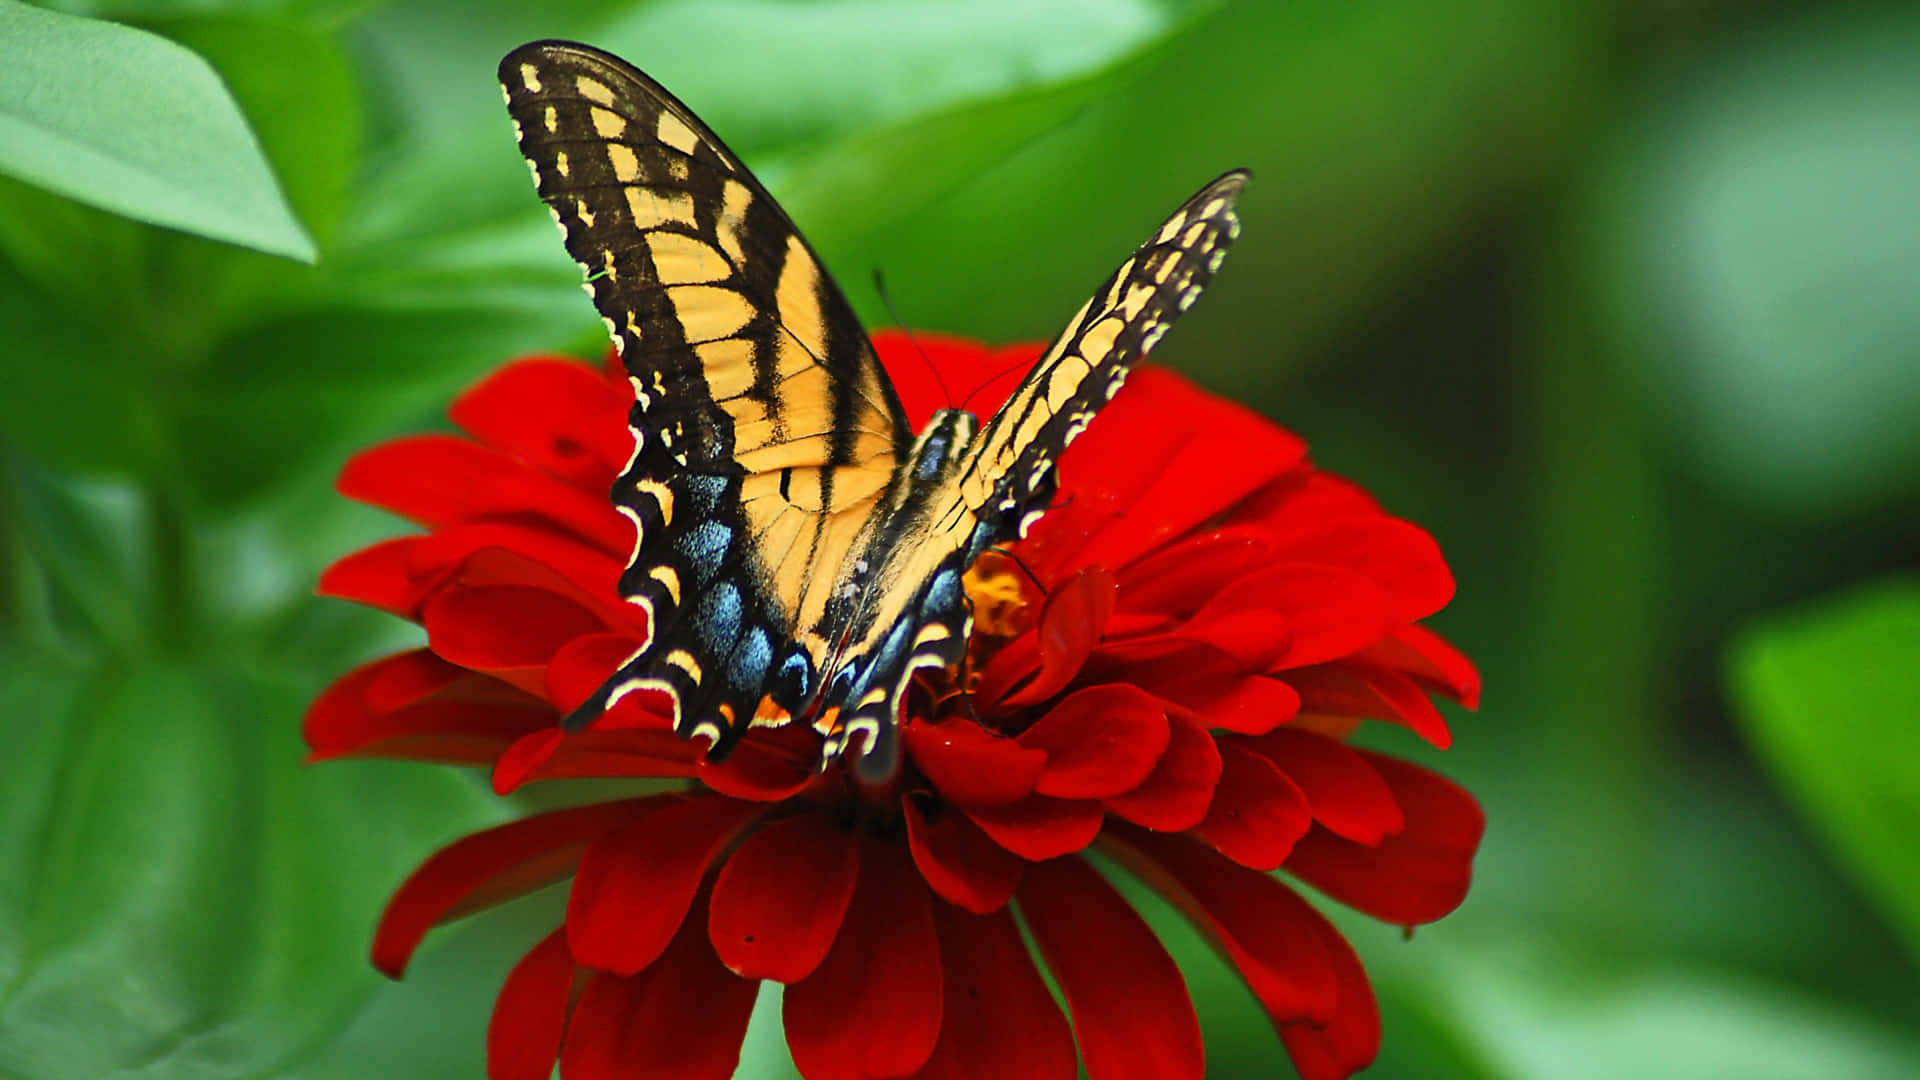 Download Butterfly Photos 3840 X 2160 Wallpaper Wallpaper | Wallpapers.com